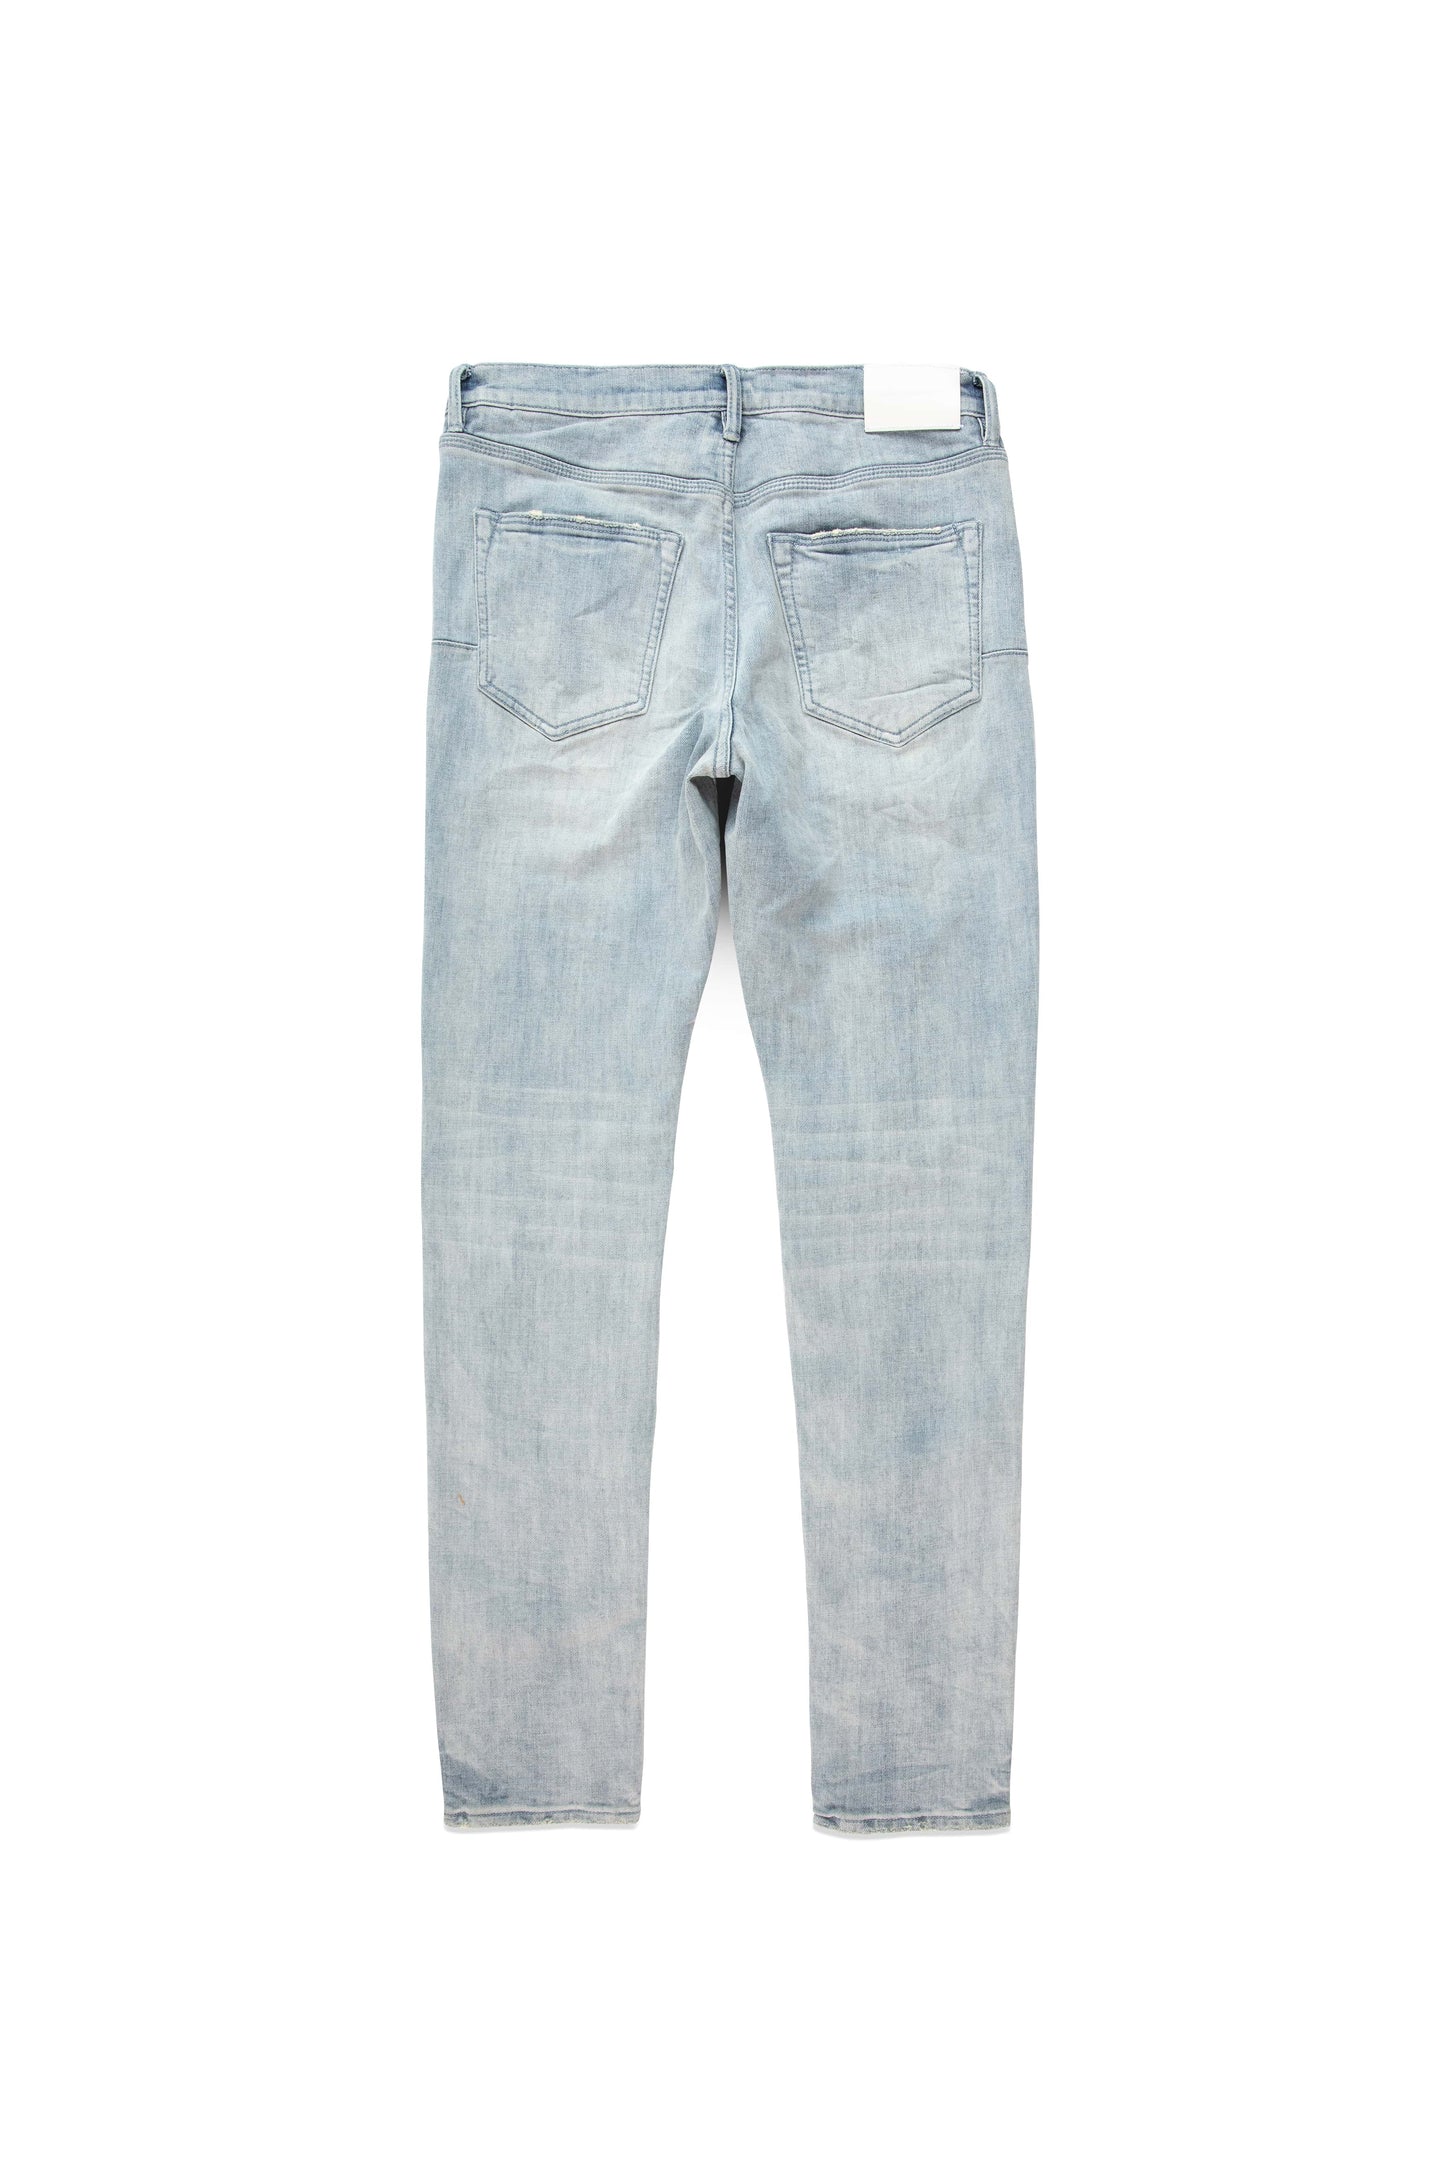 Purple Brand P001 Low Rise Skinny Jeans - MITR123 - Civilized